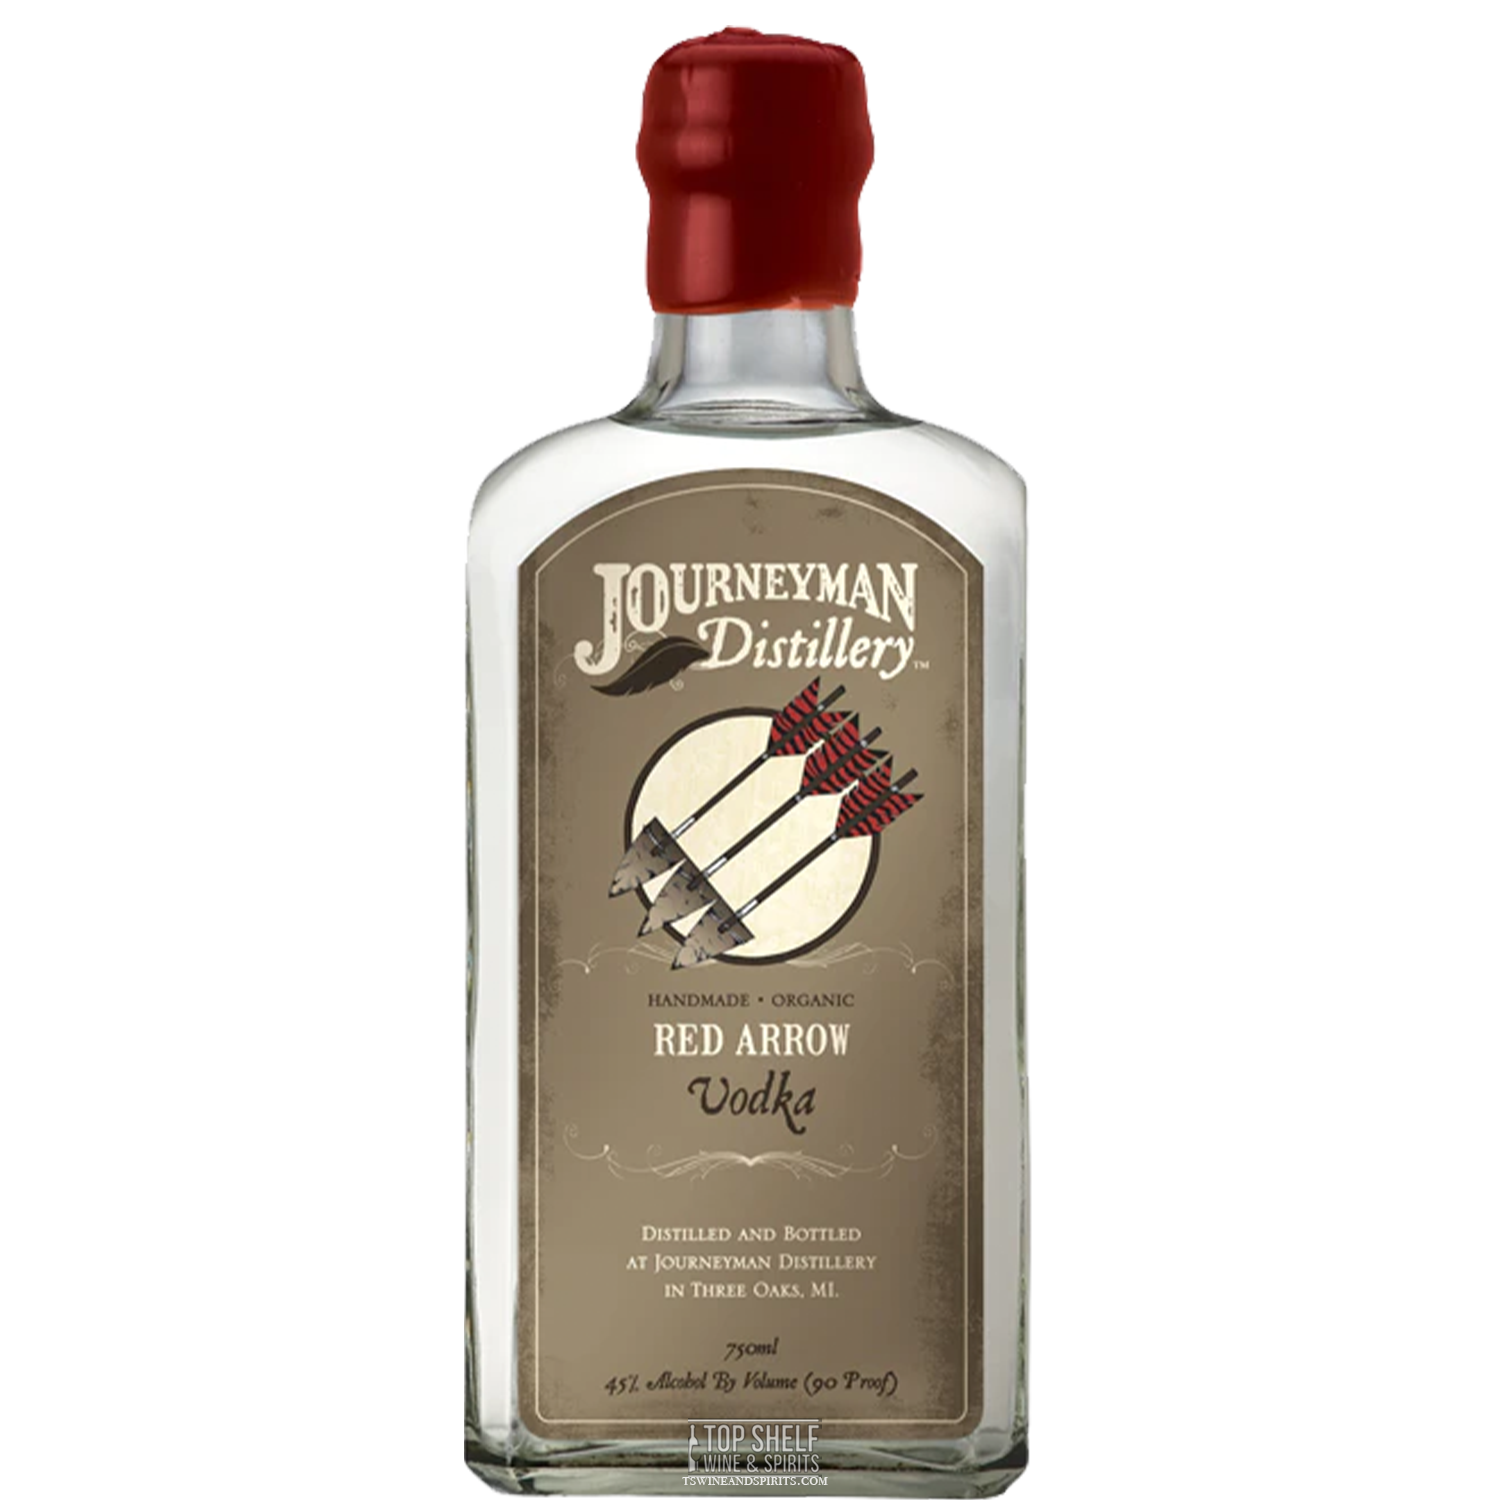 Journeyman Distillery Red Arrow American Vodka